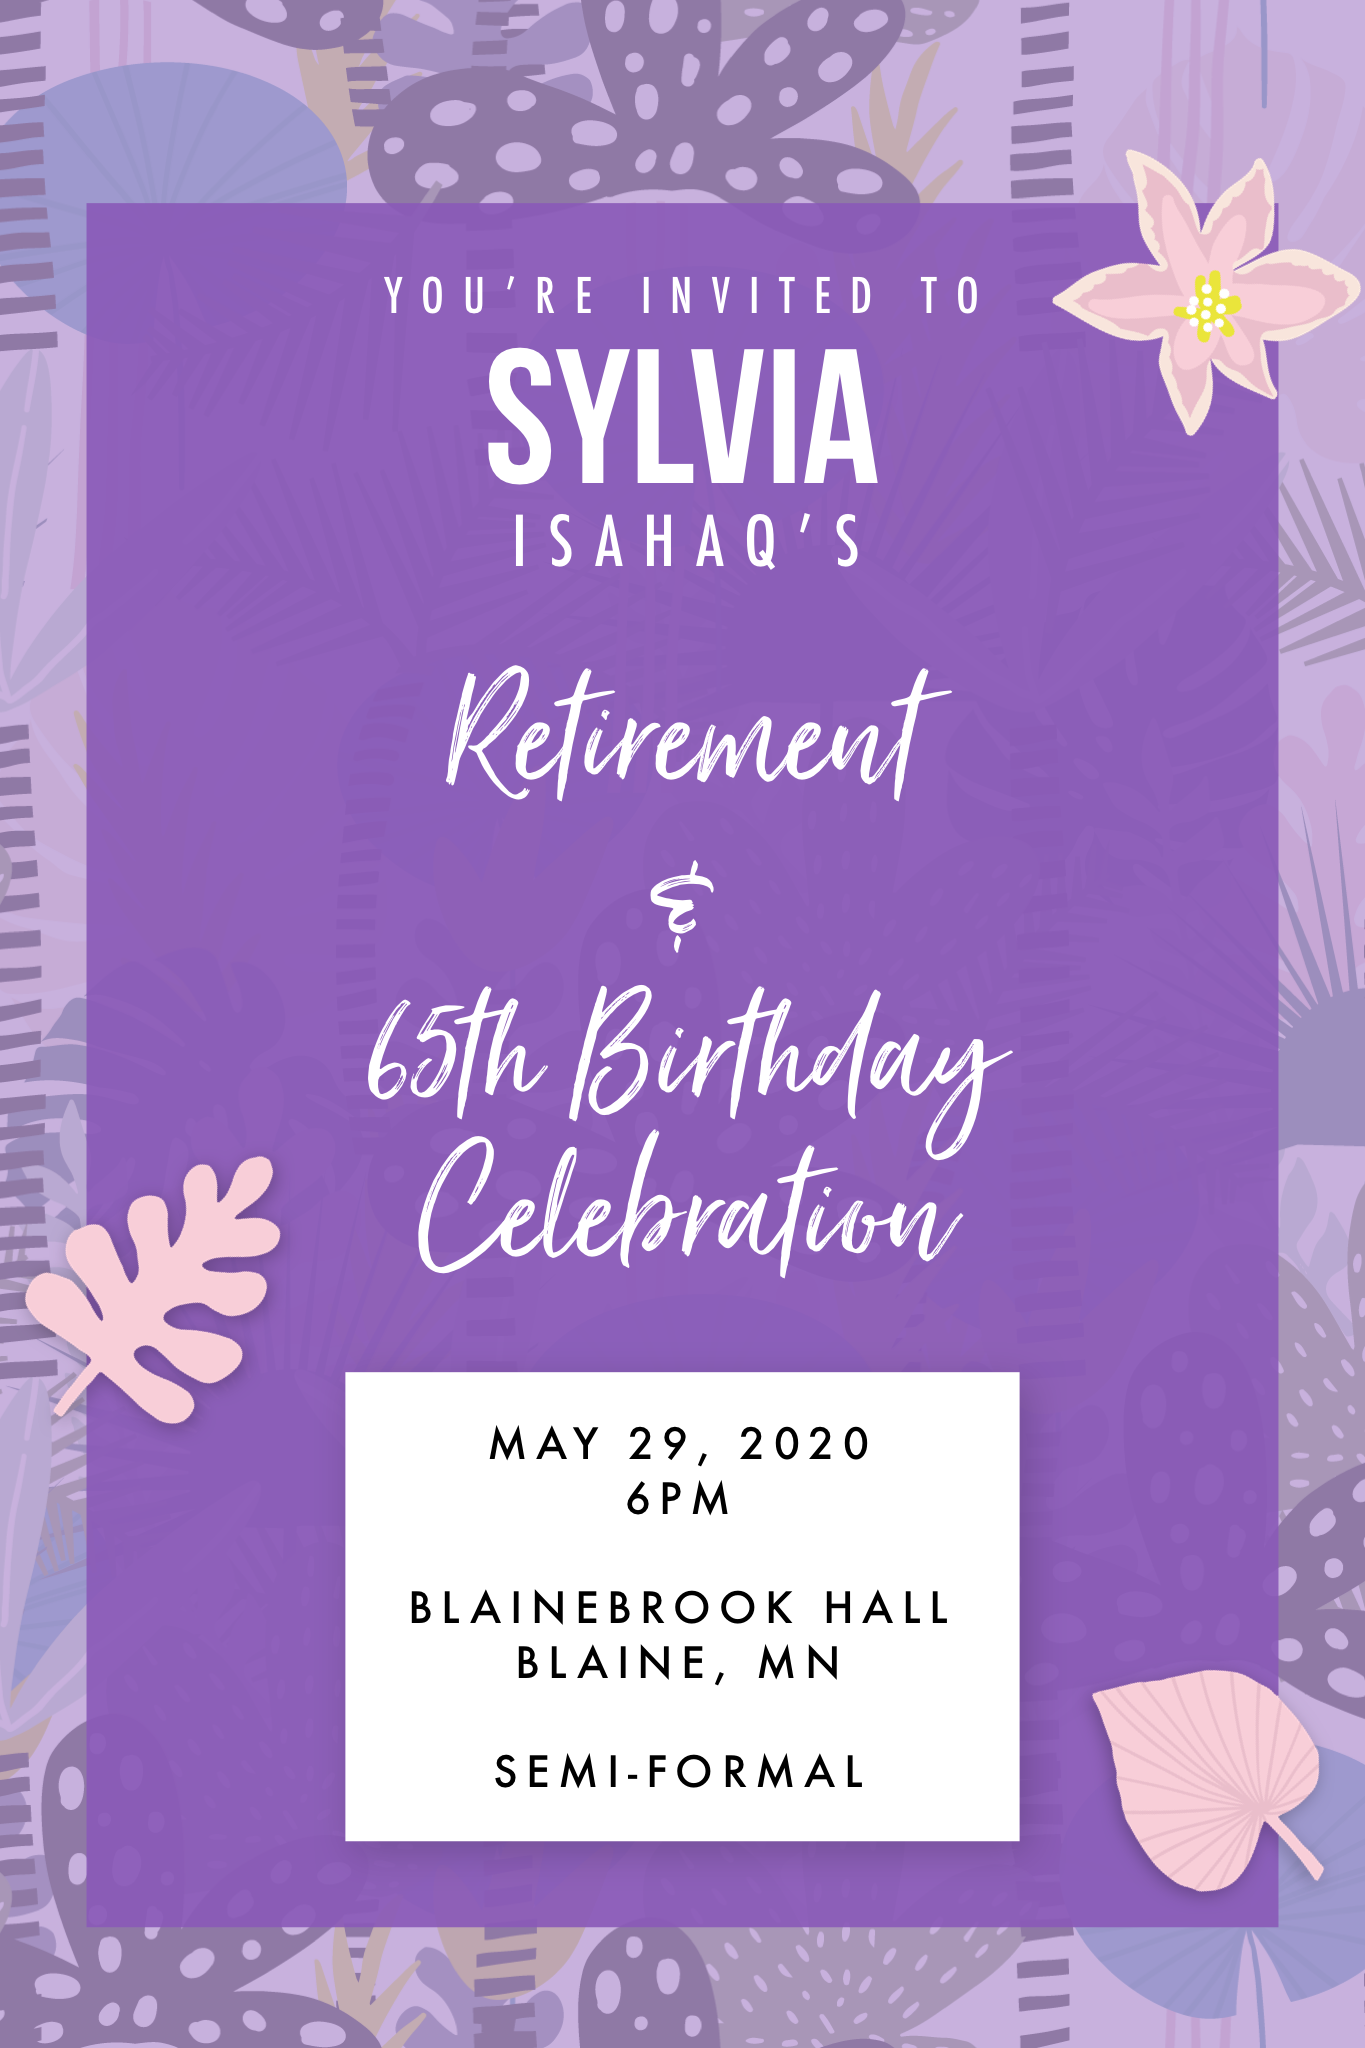 Sylvia Isahaq's Retirement & 65th Birthday Celebration